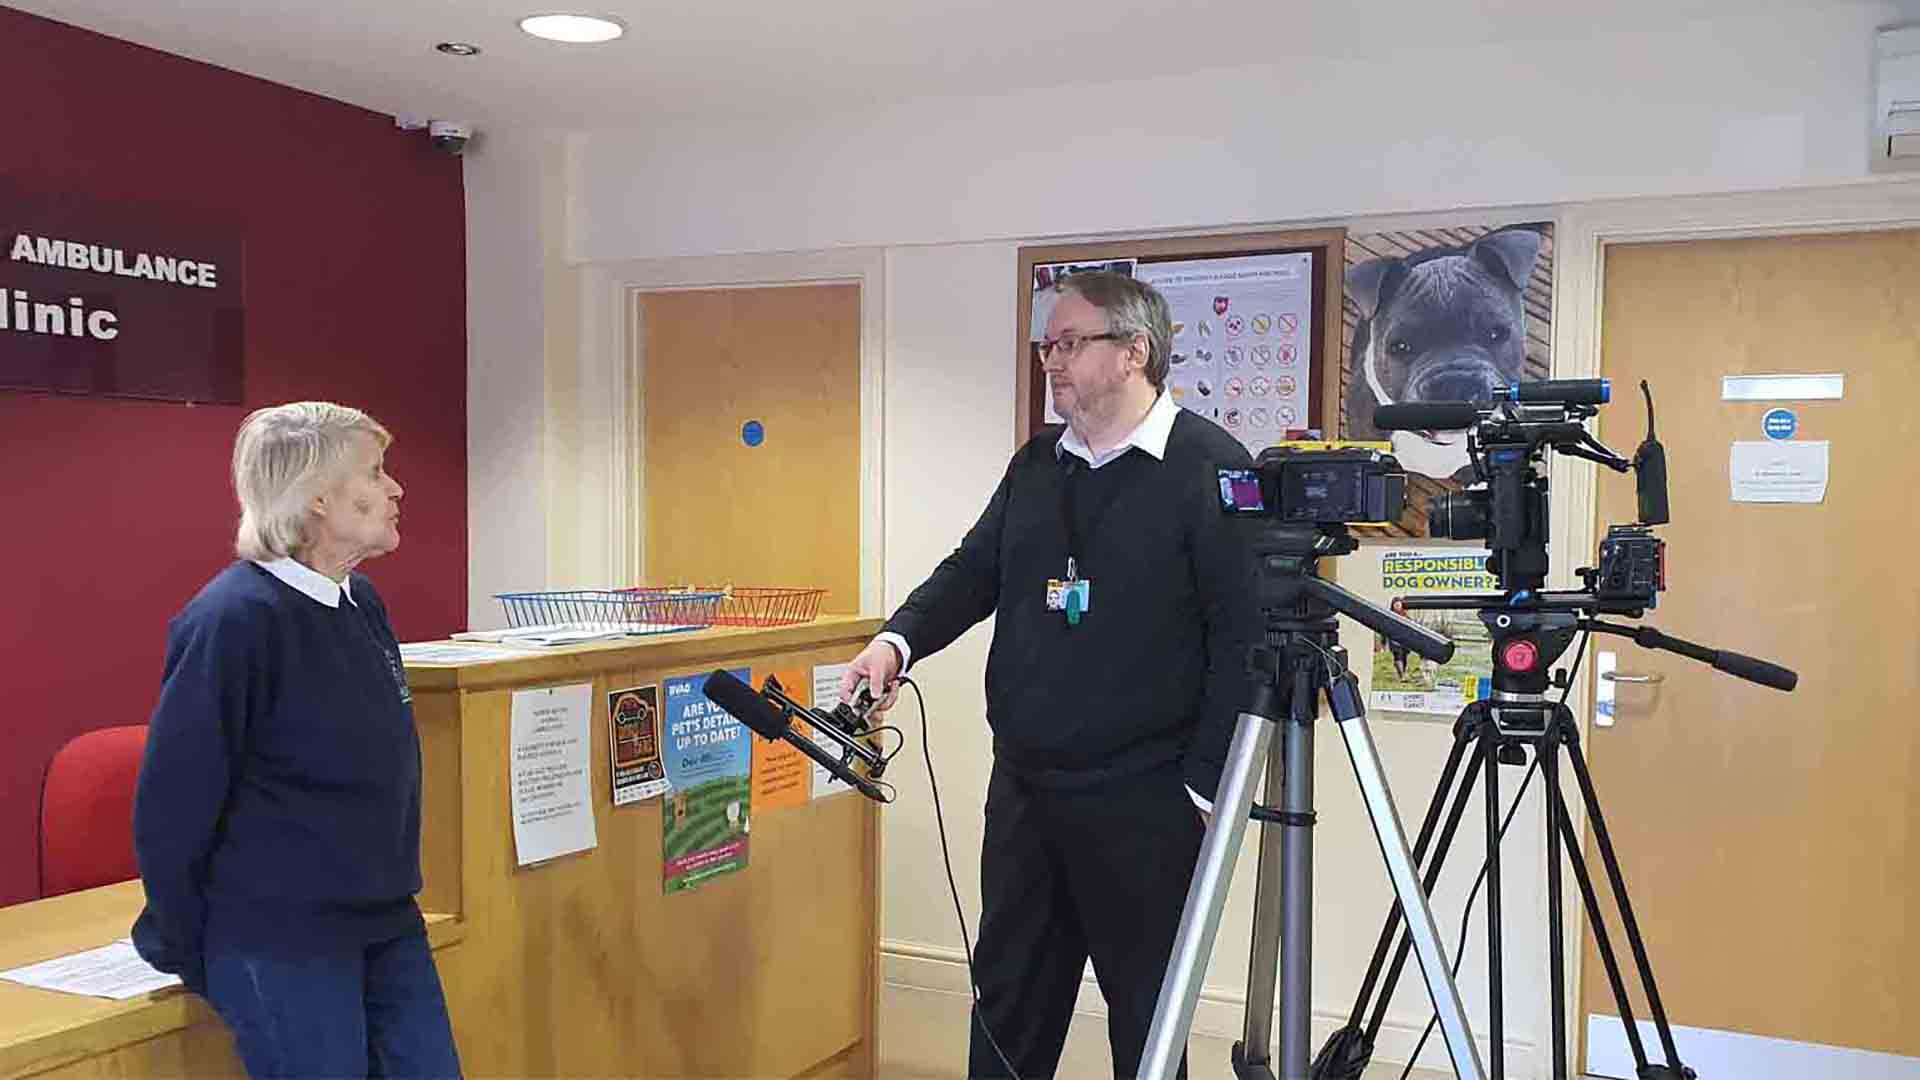 Michael Collins interviews Diana Lewis at the North Devon Animal Ambulance for Rebel Boy TV | RBTV